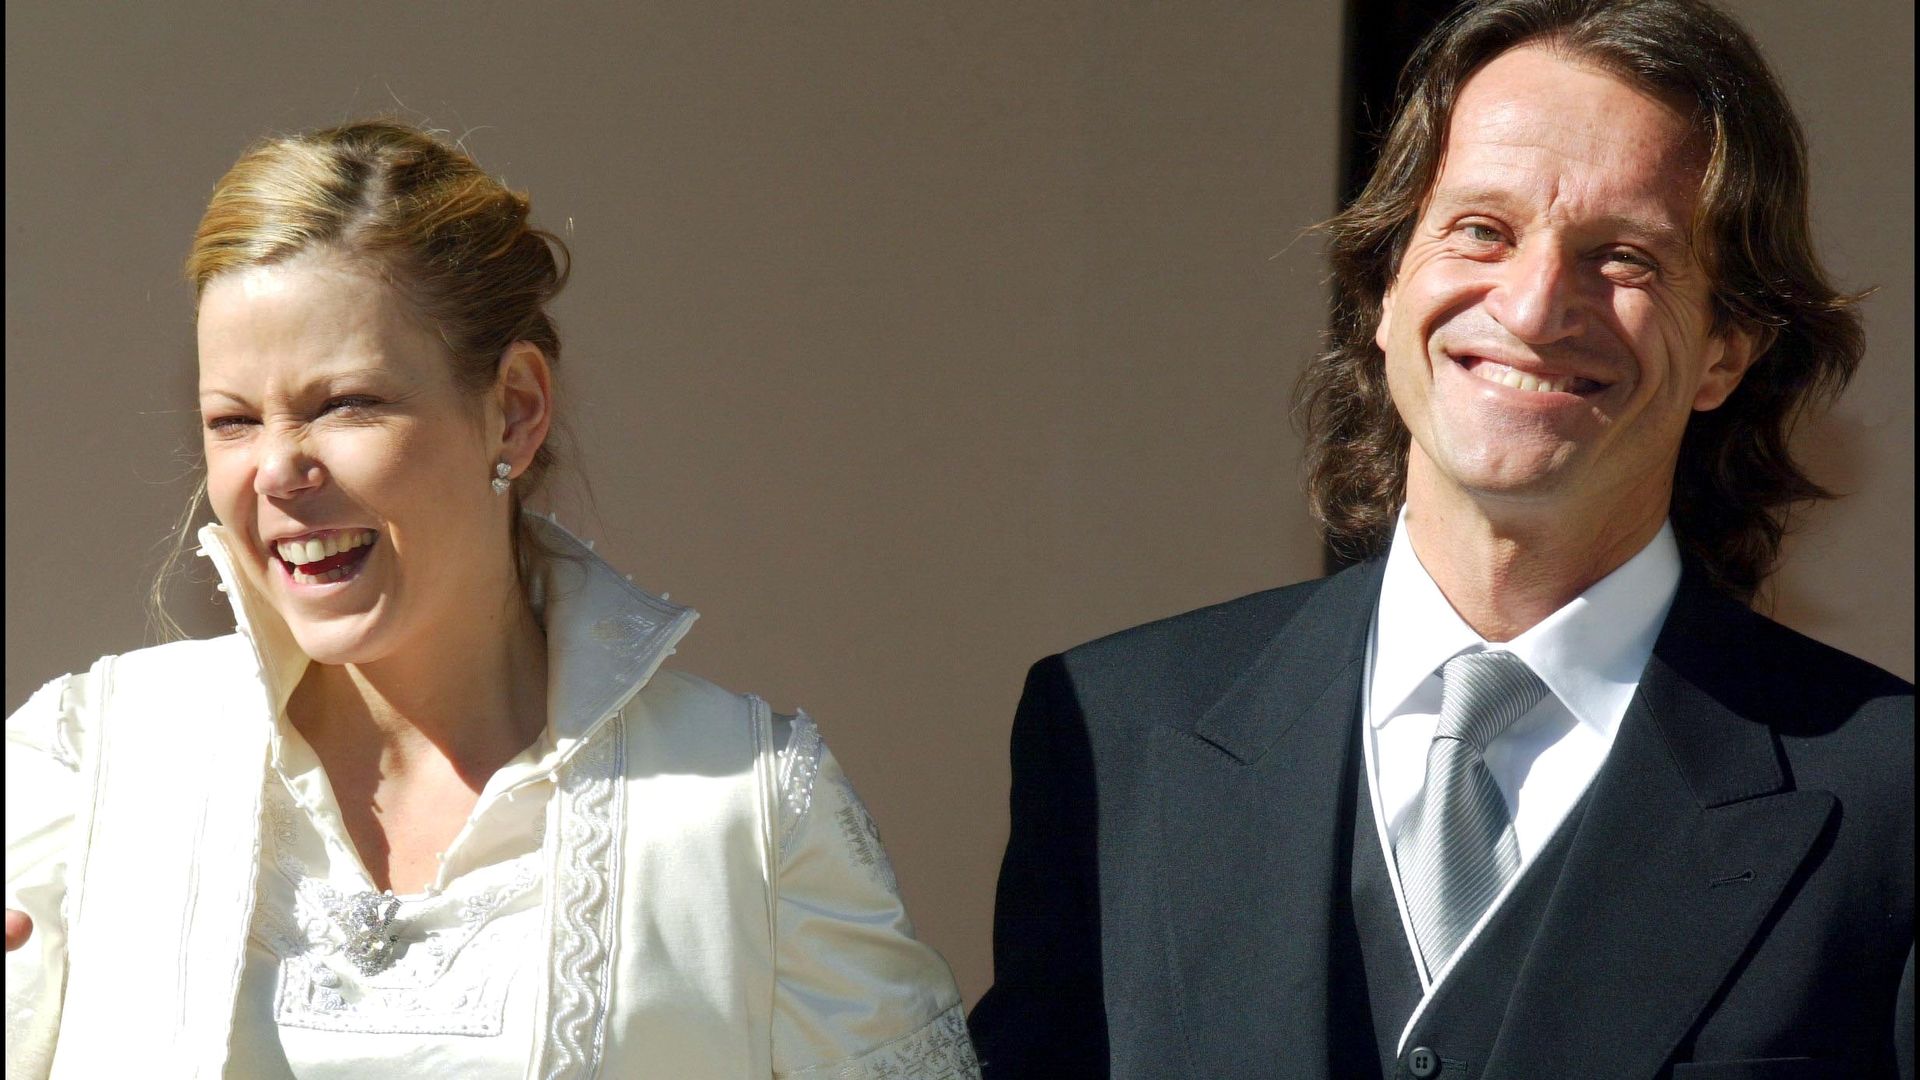 Princess Kalina in a white wedding dress smiling with her husband Kitin